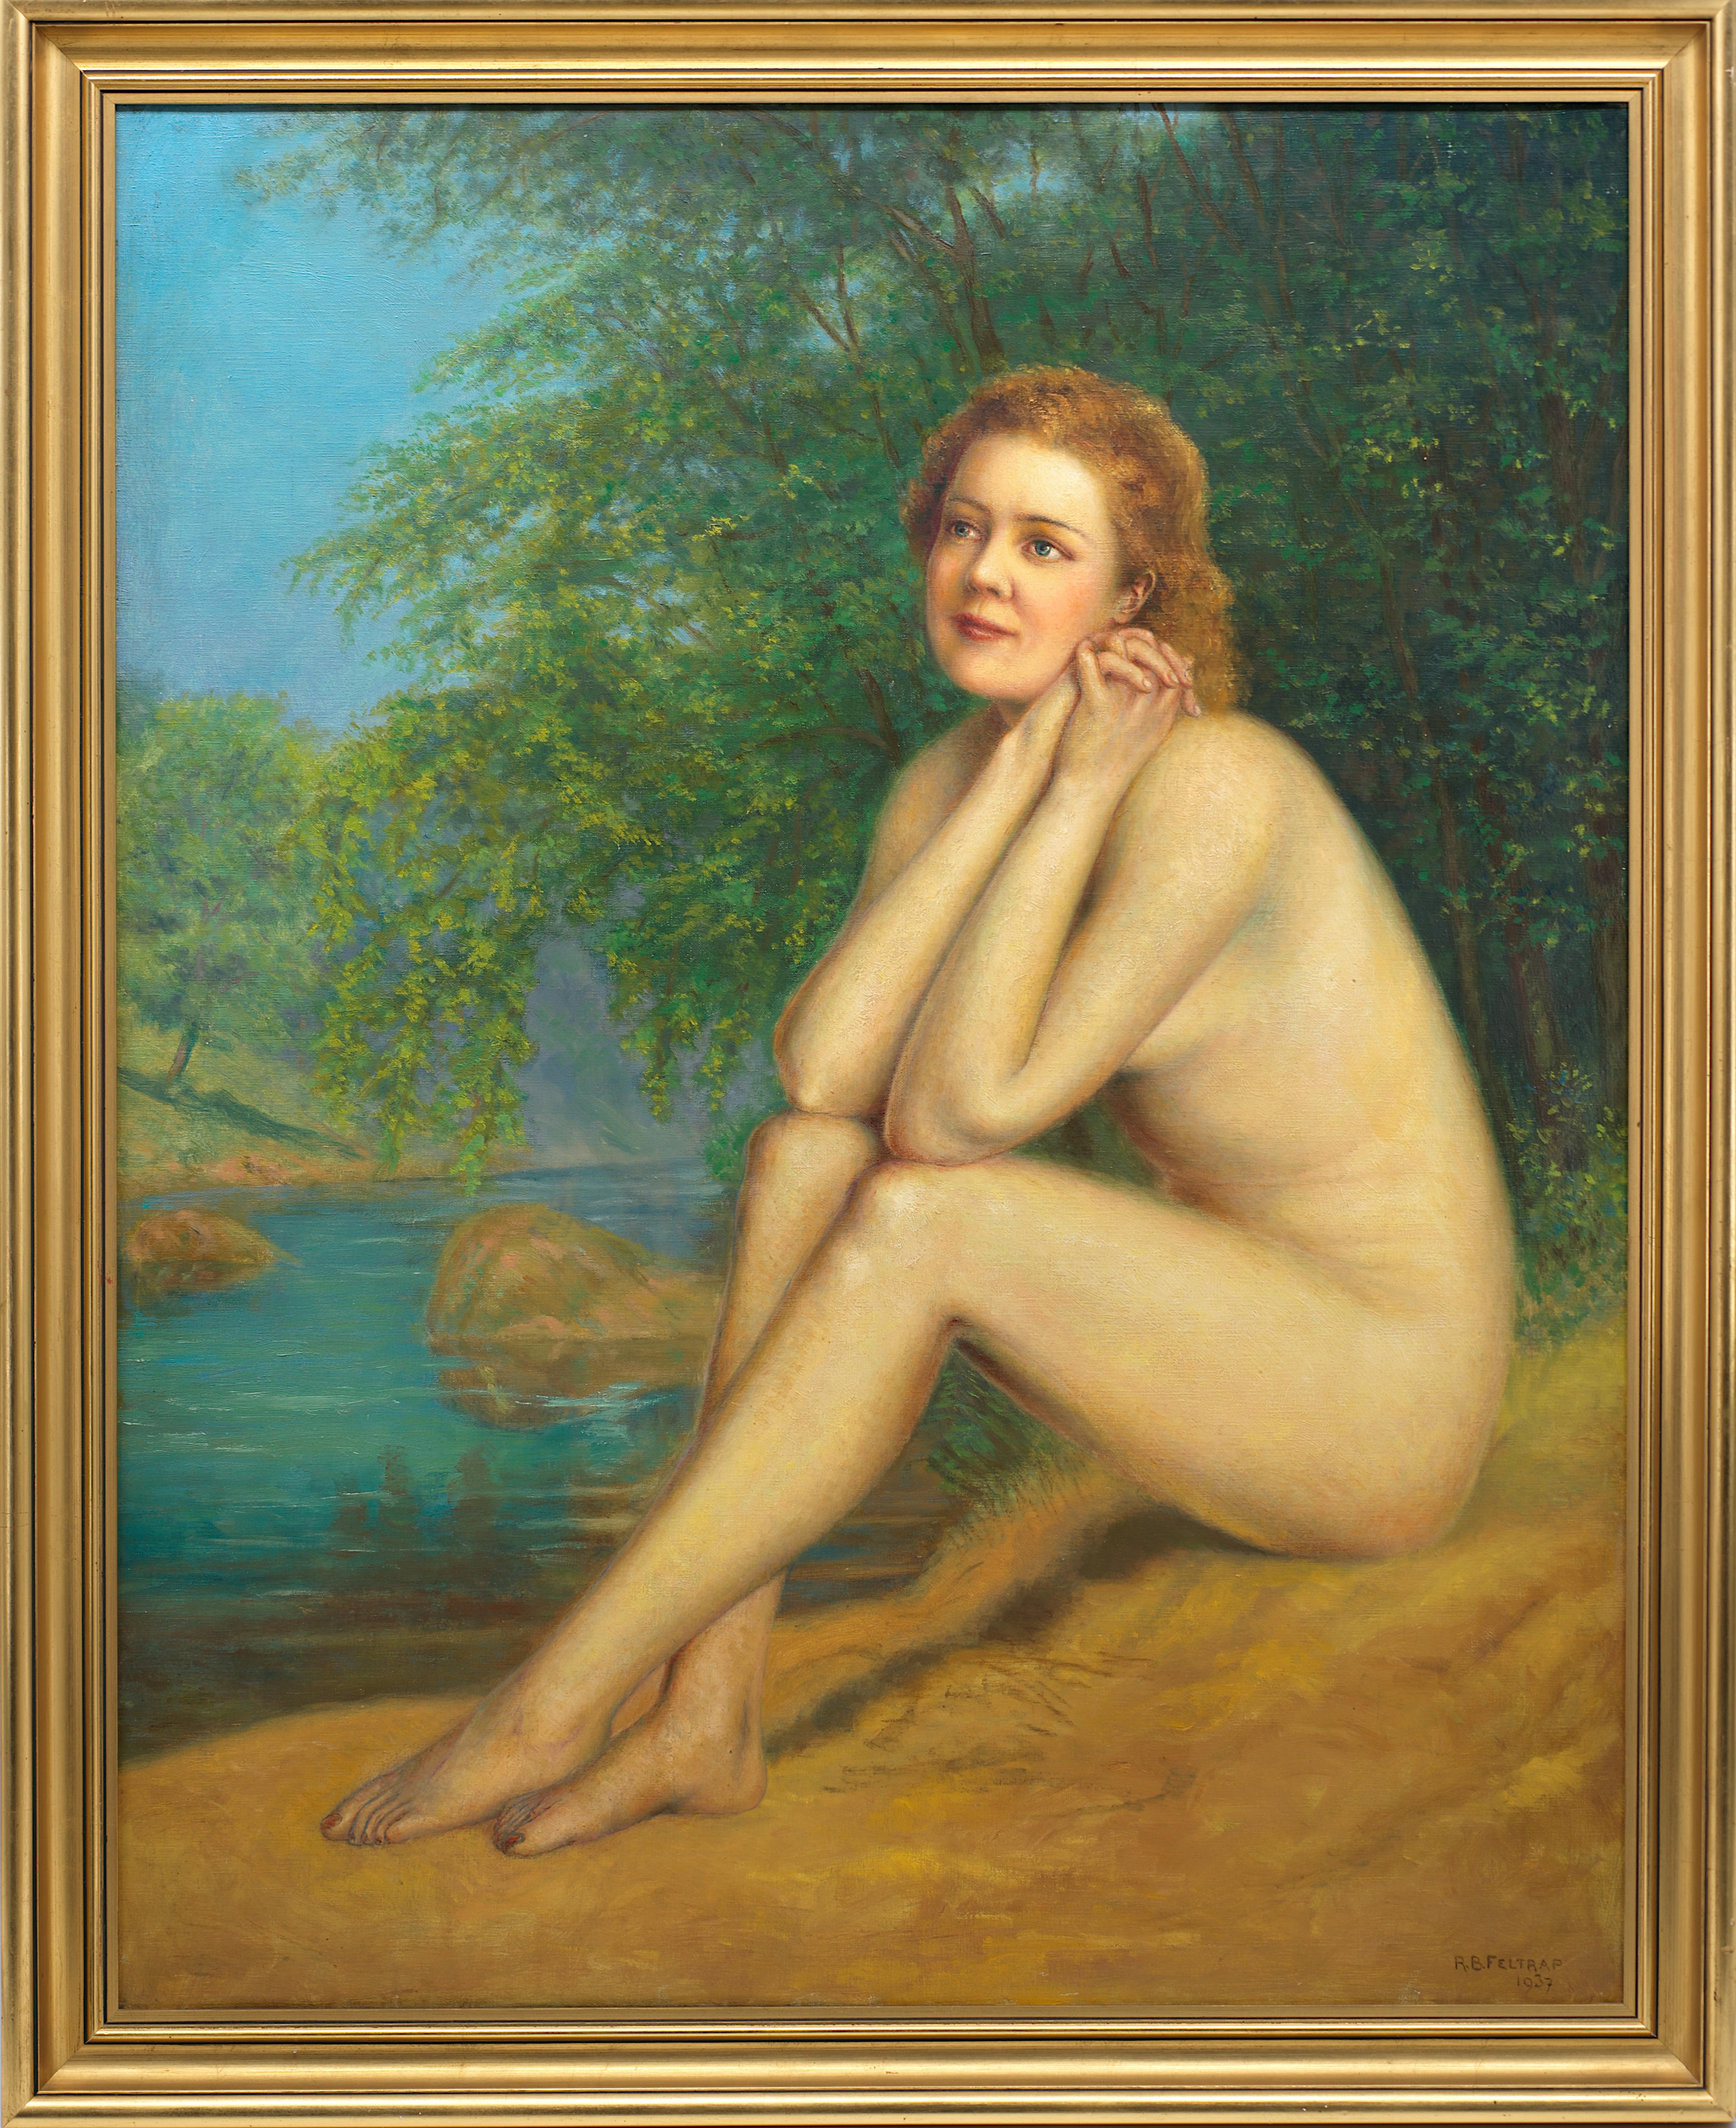 R.B. FELTRAP, Oil on canvas, Nude, 1937